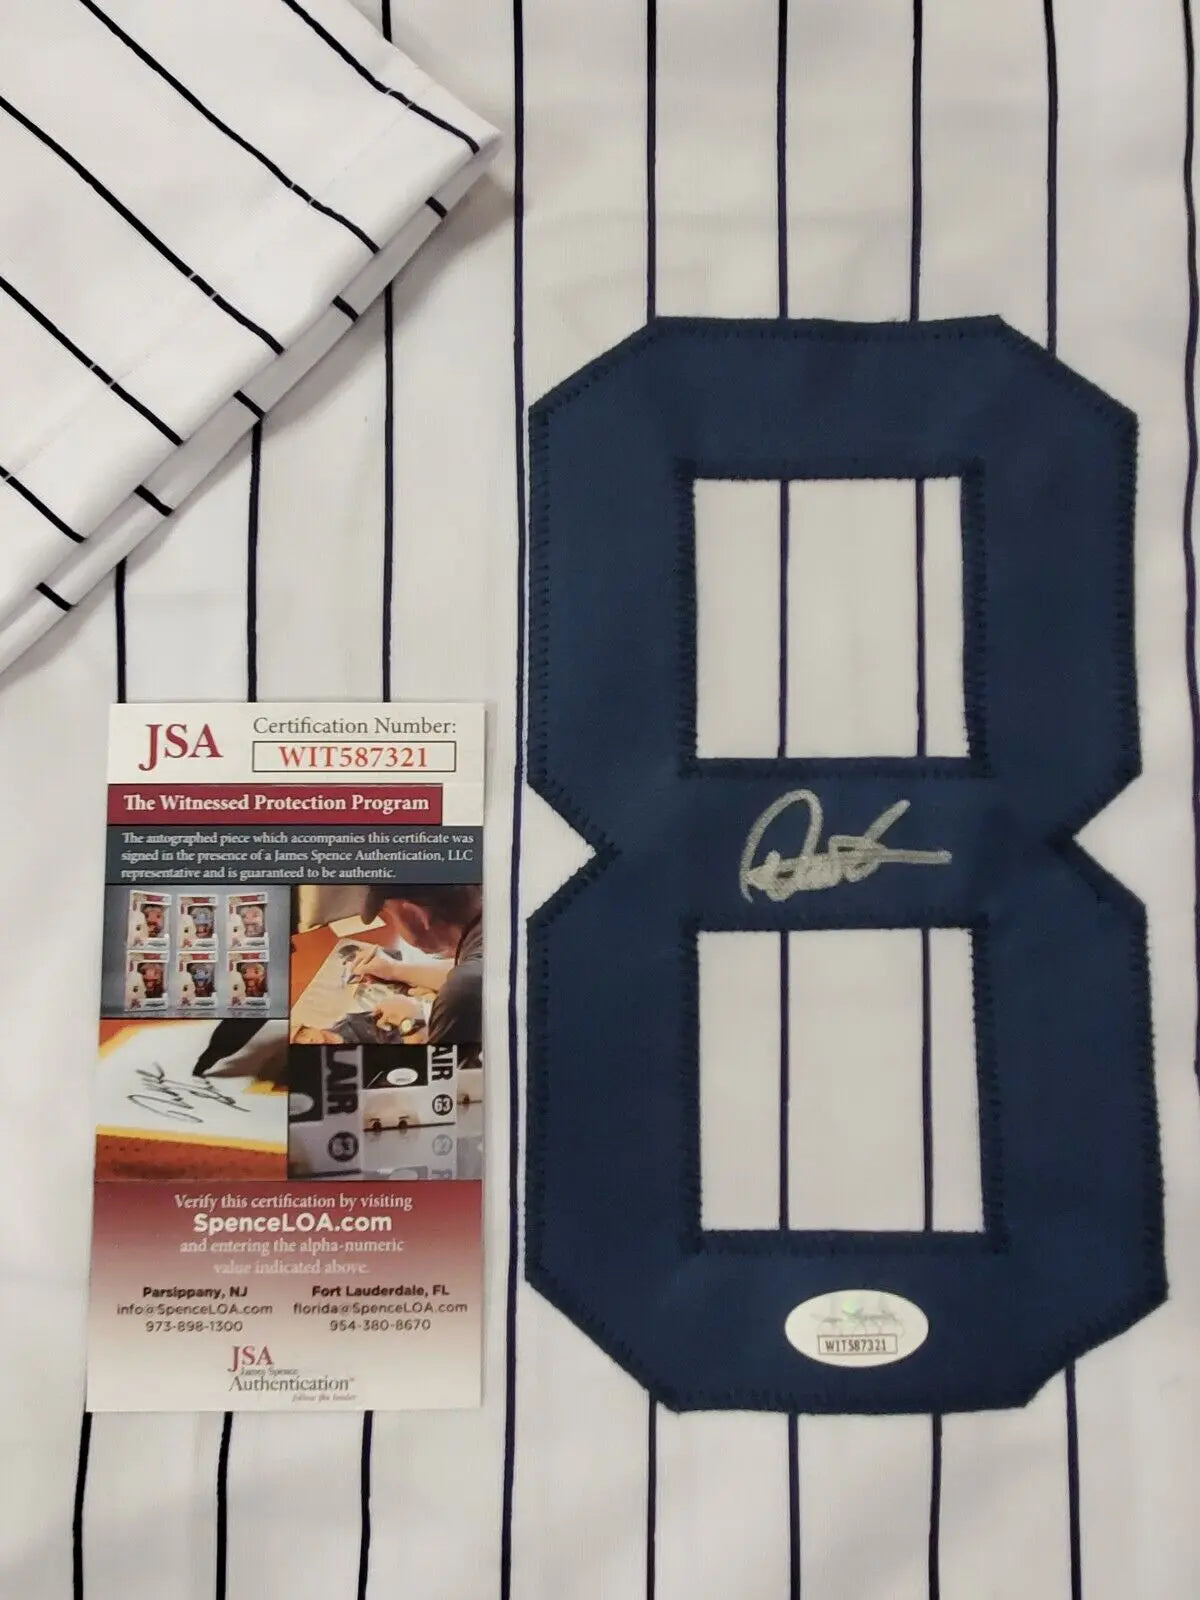 N.Y. Yankees Style Graig Nettles Autographed Signed Custom Jersey Jsa Coa